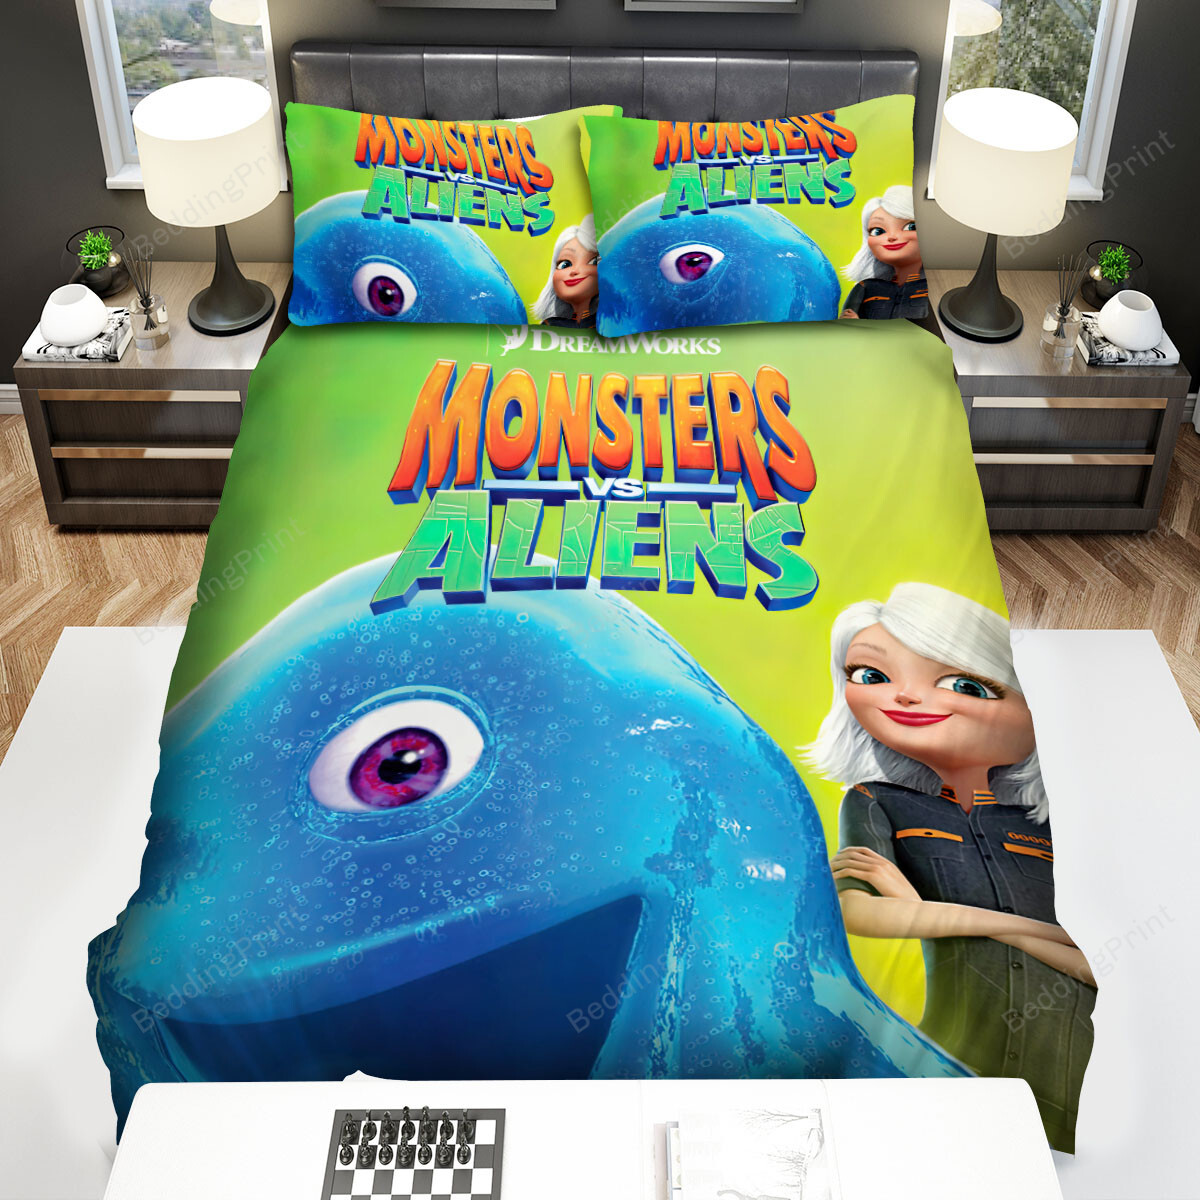 Monsters Vs. Aliens (2009) Movie Poster 2 Bed Sheets Spread Comforter Duvet Cover Bedding Sets